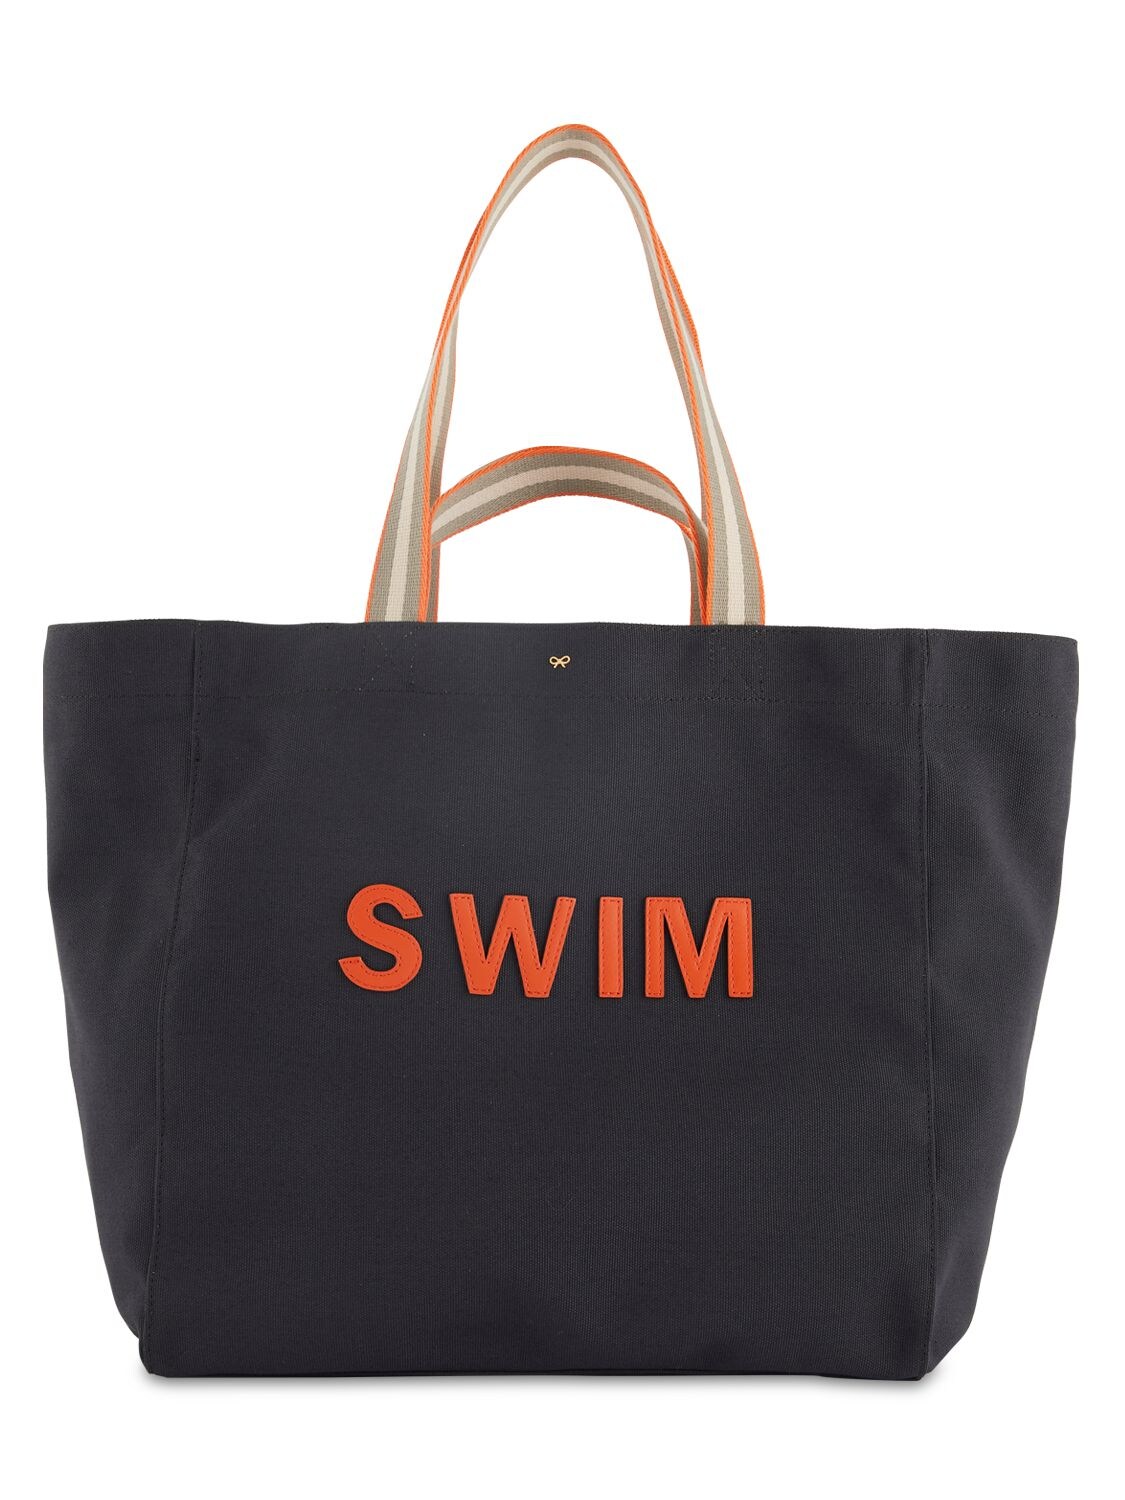 Anya Hindmarch - Household swim リサイクルキャンバストートバッグ 